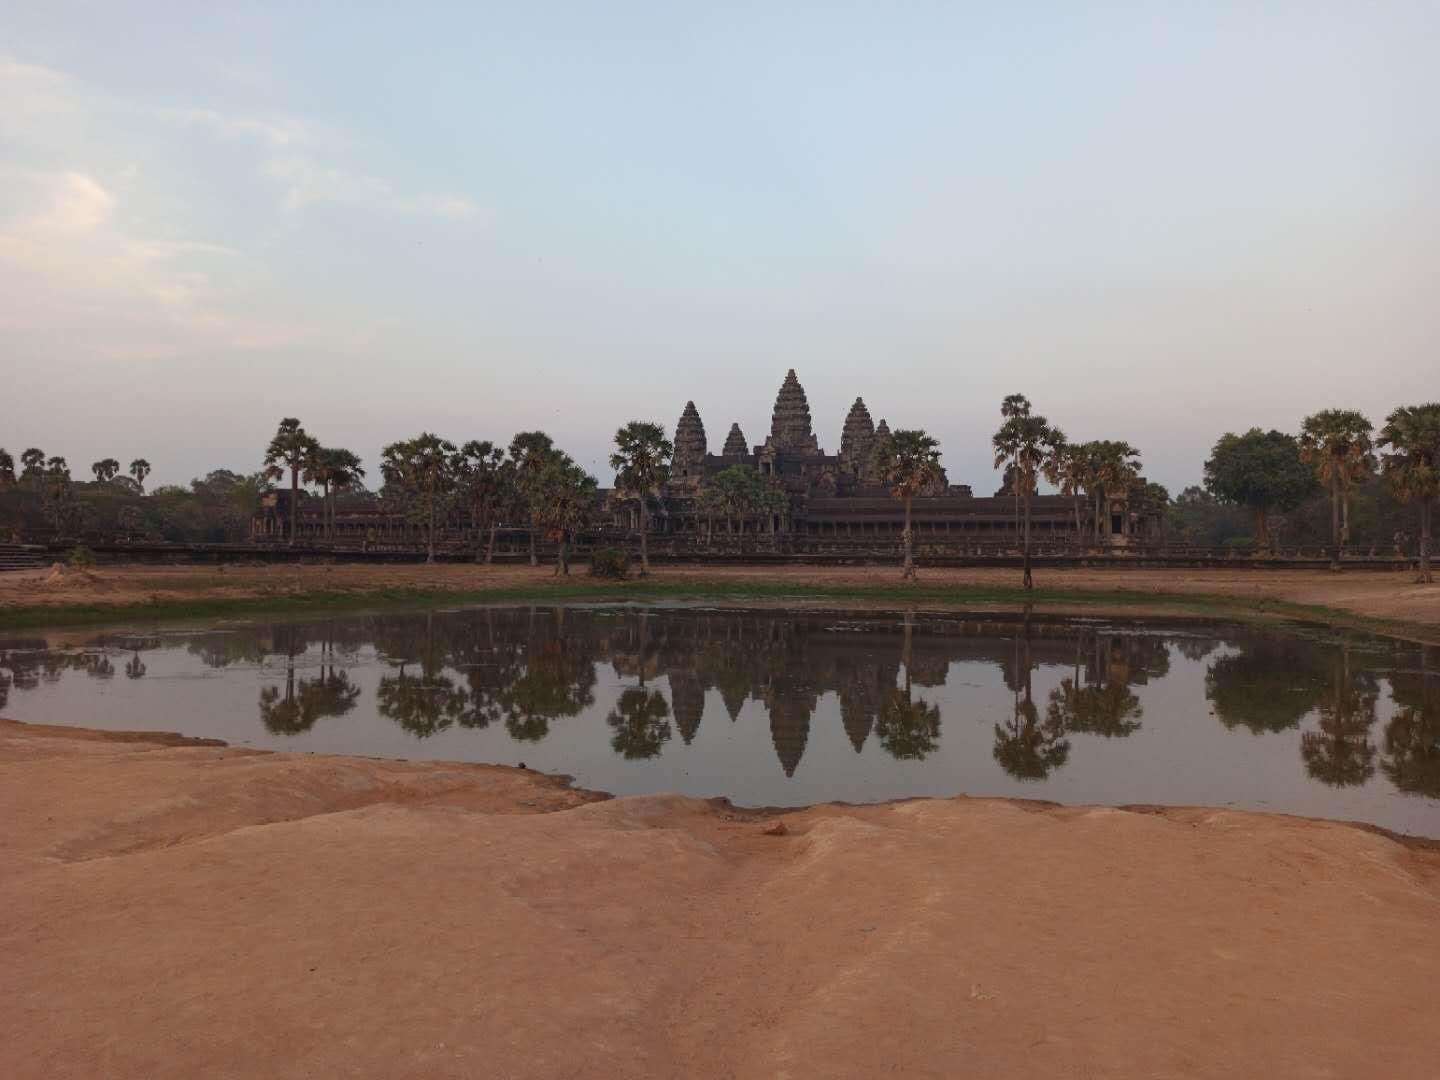 Gareth says seeing Angkor Wat this deserted was very strange